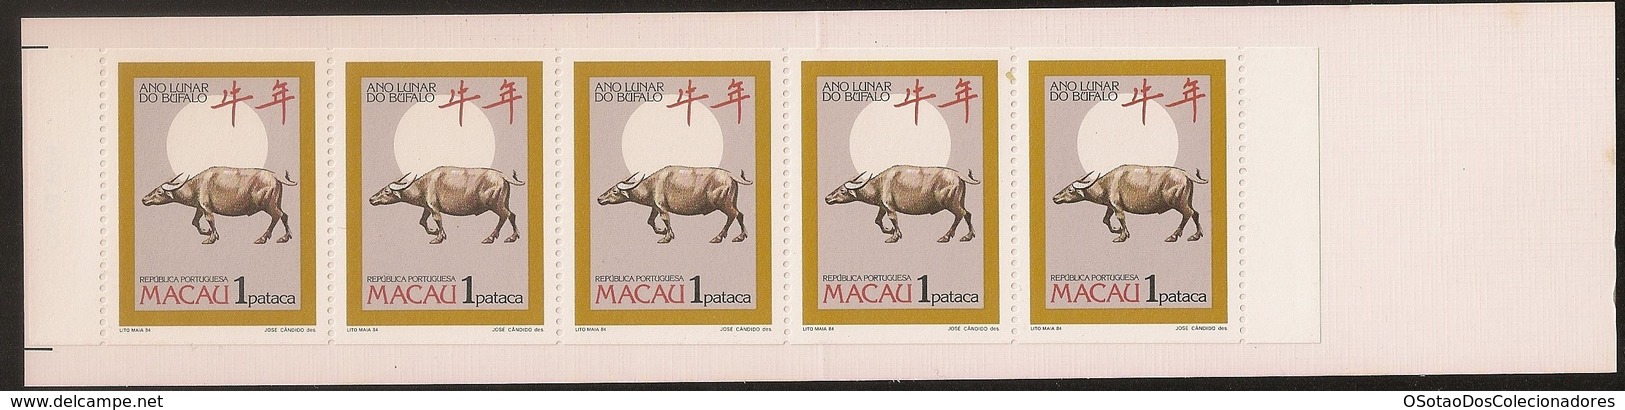 Macau Macao Chine Caderneta 1985 - Ano Lunar Do Bufalo - Chinese New Year - Year Of The Ox - MNH/Neuf - Cuadernillos